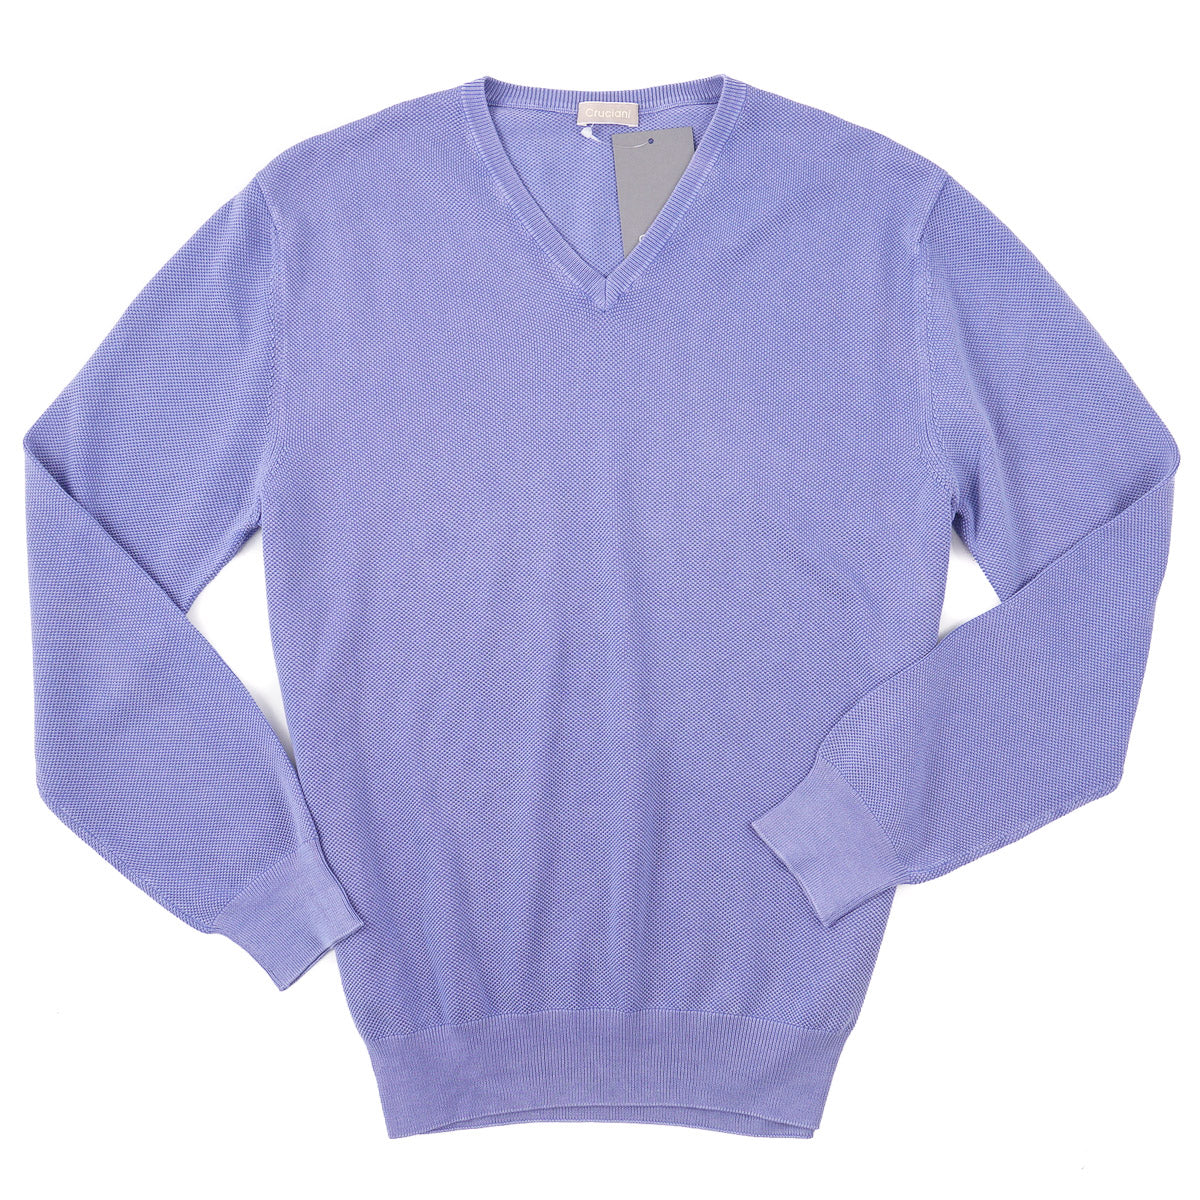 Cruciani Pique Knit Cotton Sweater - Top Shelf Apparel